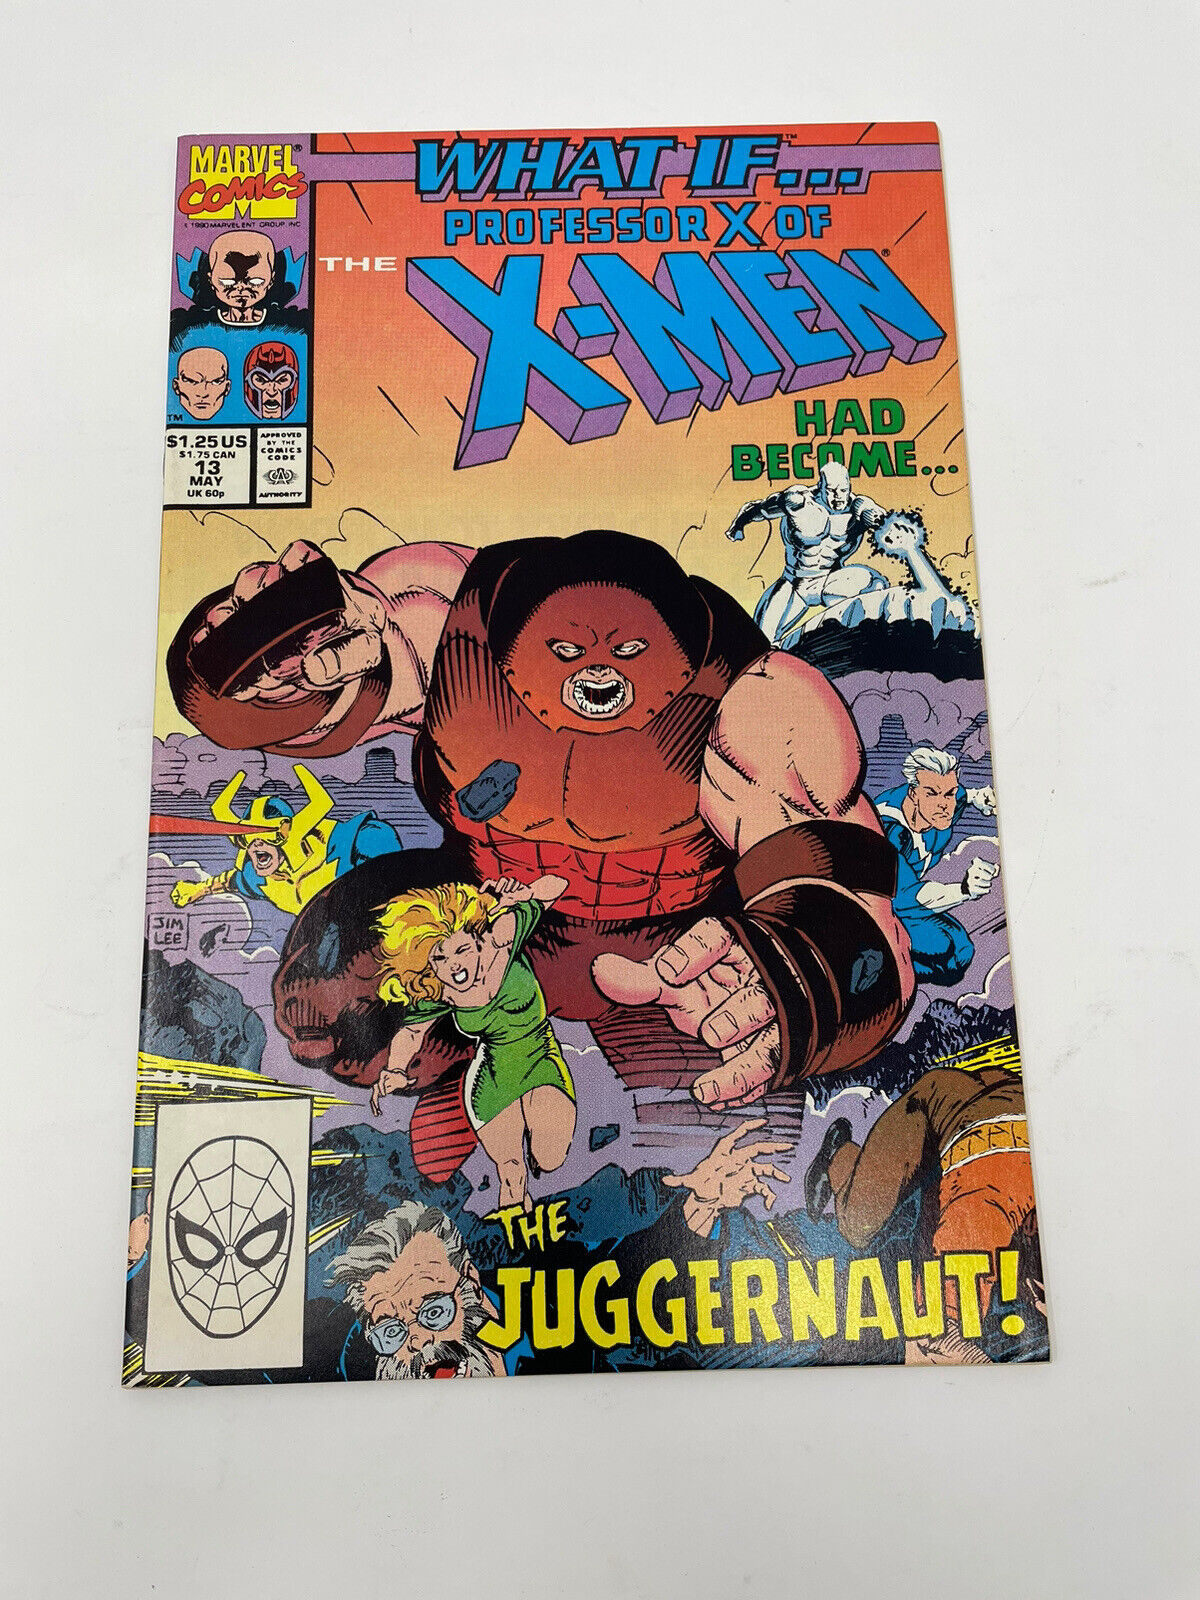 What If...? #13 Professor X Had Become the Juggernaut? (05/1990) NM UNREAD!